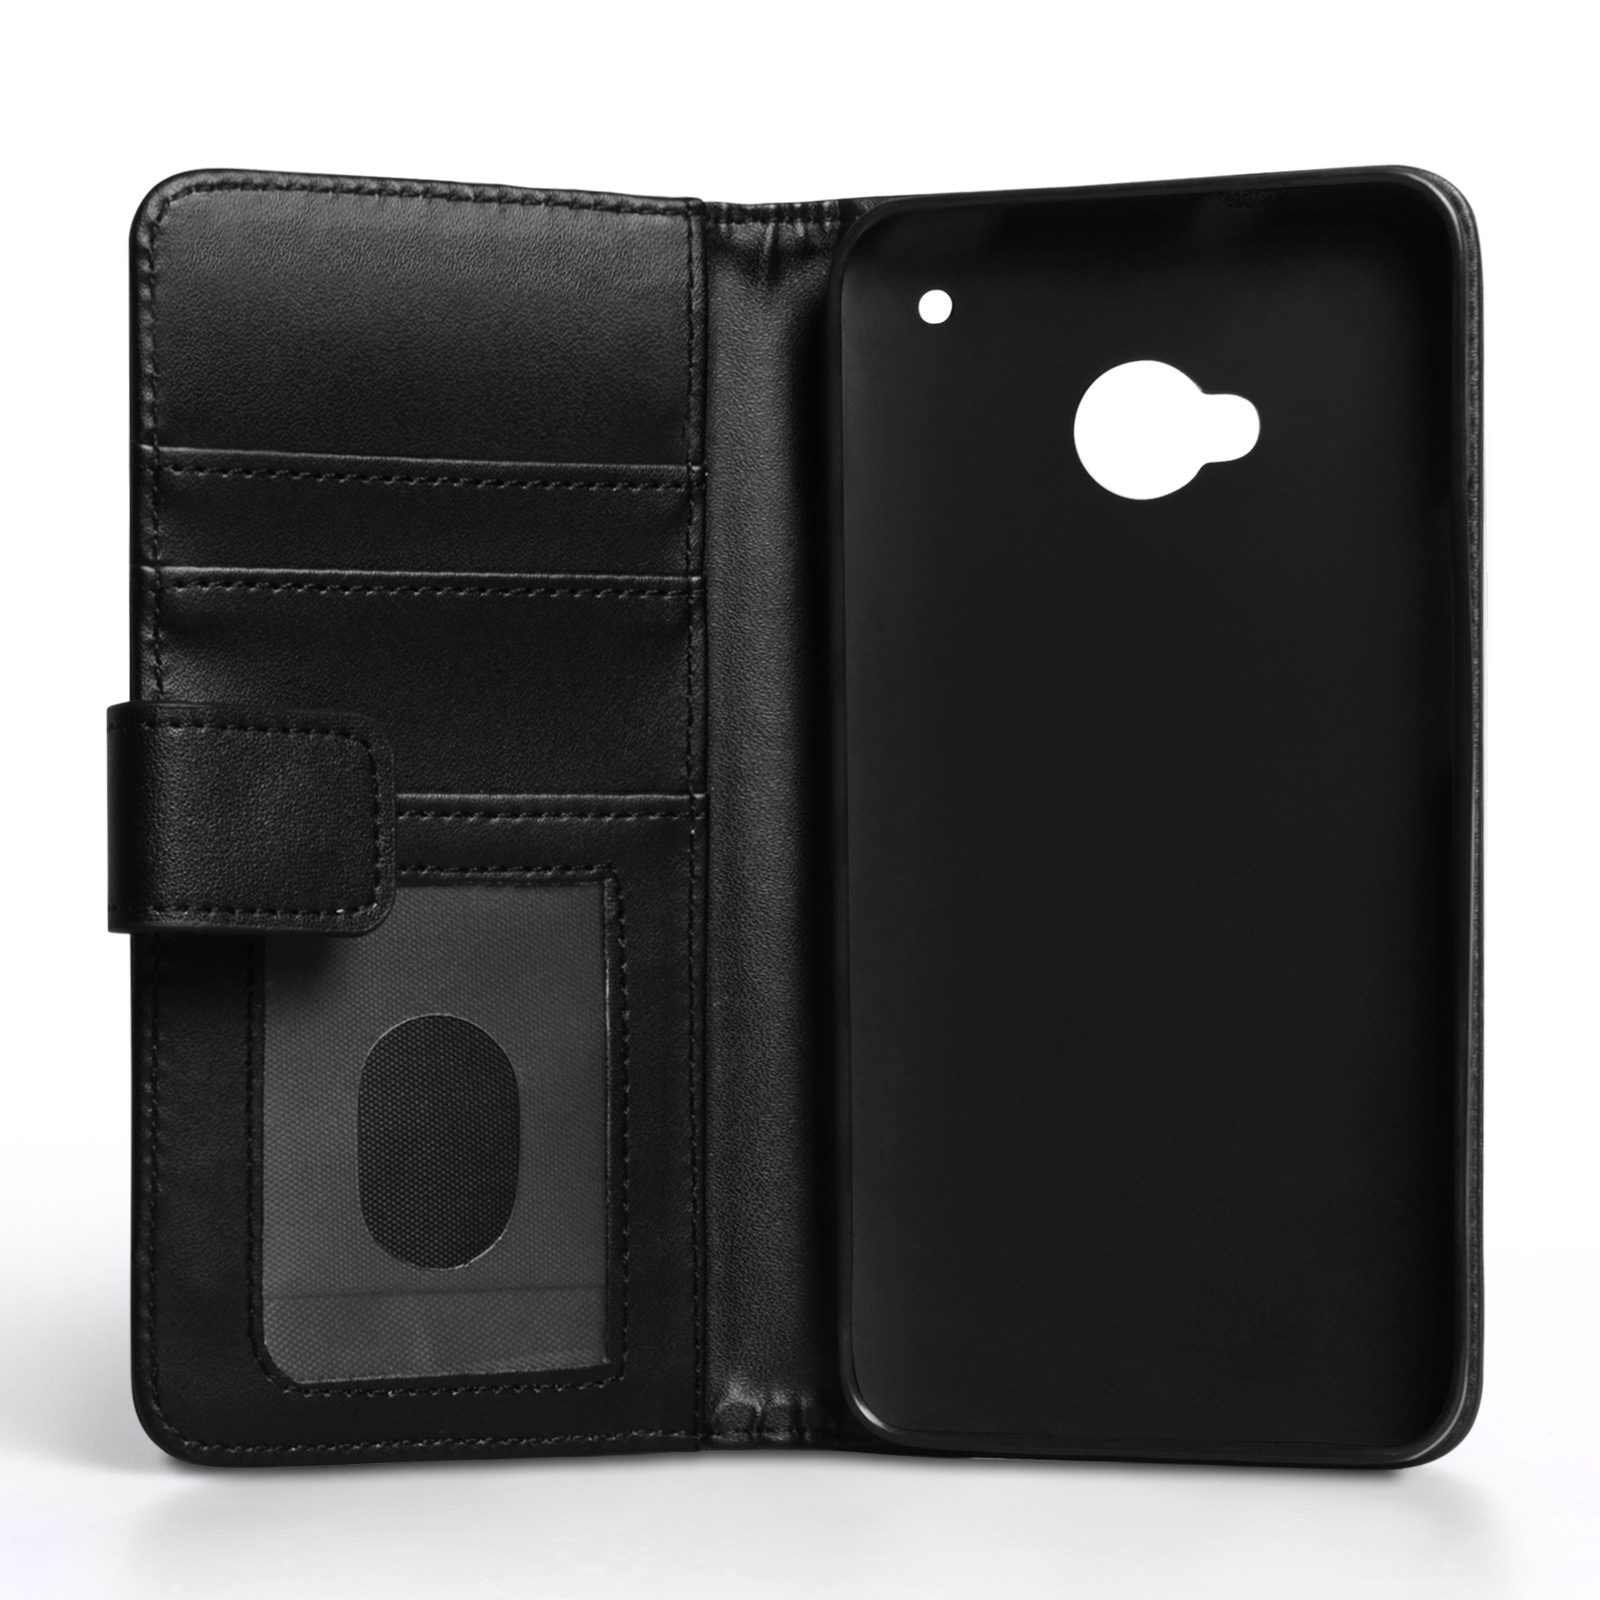 Caseflex HTC One Real Leather Wallet Case - Black